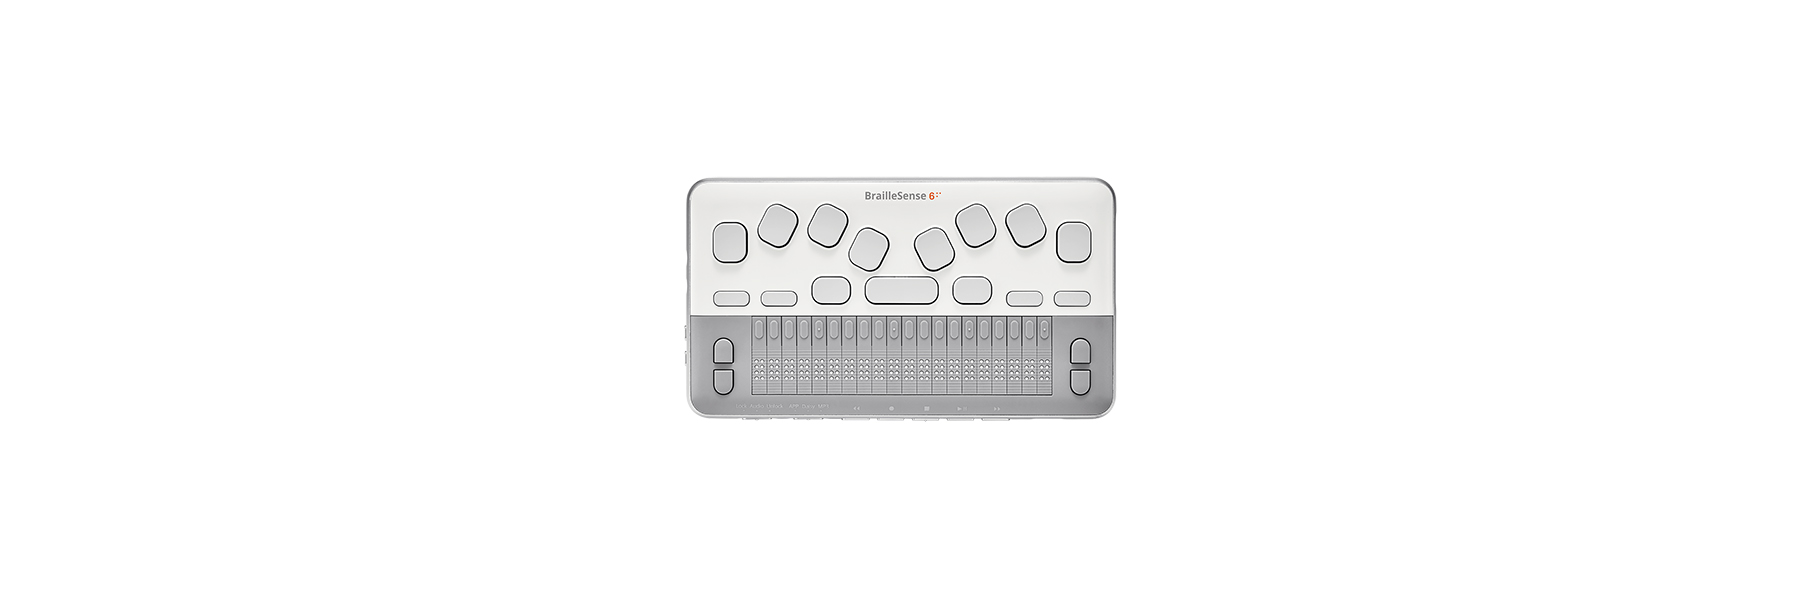 Abbildung der Braille Sense 6 Mini